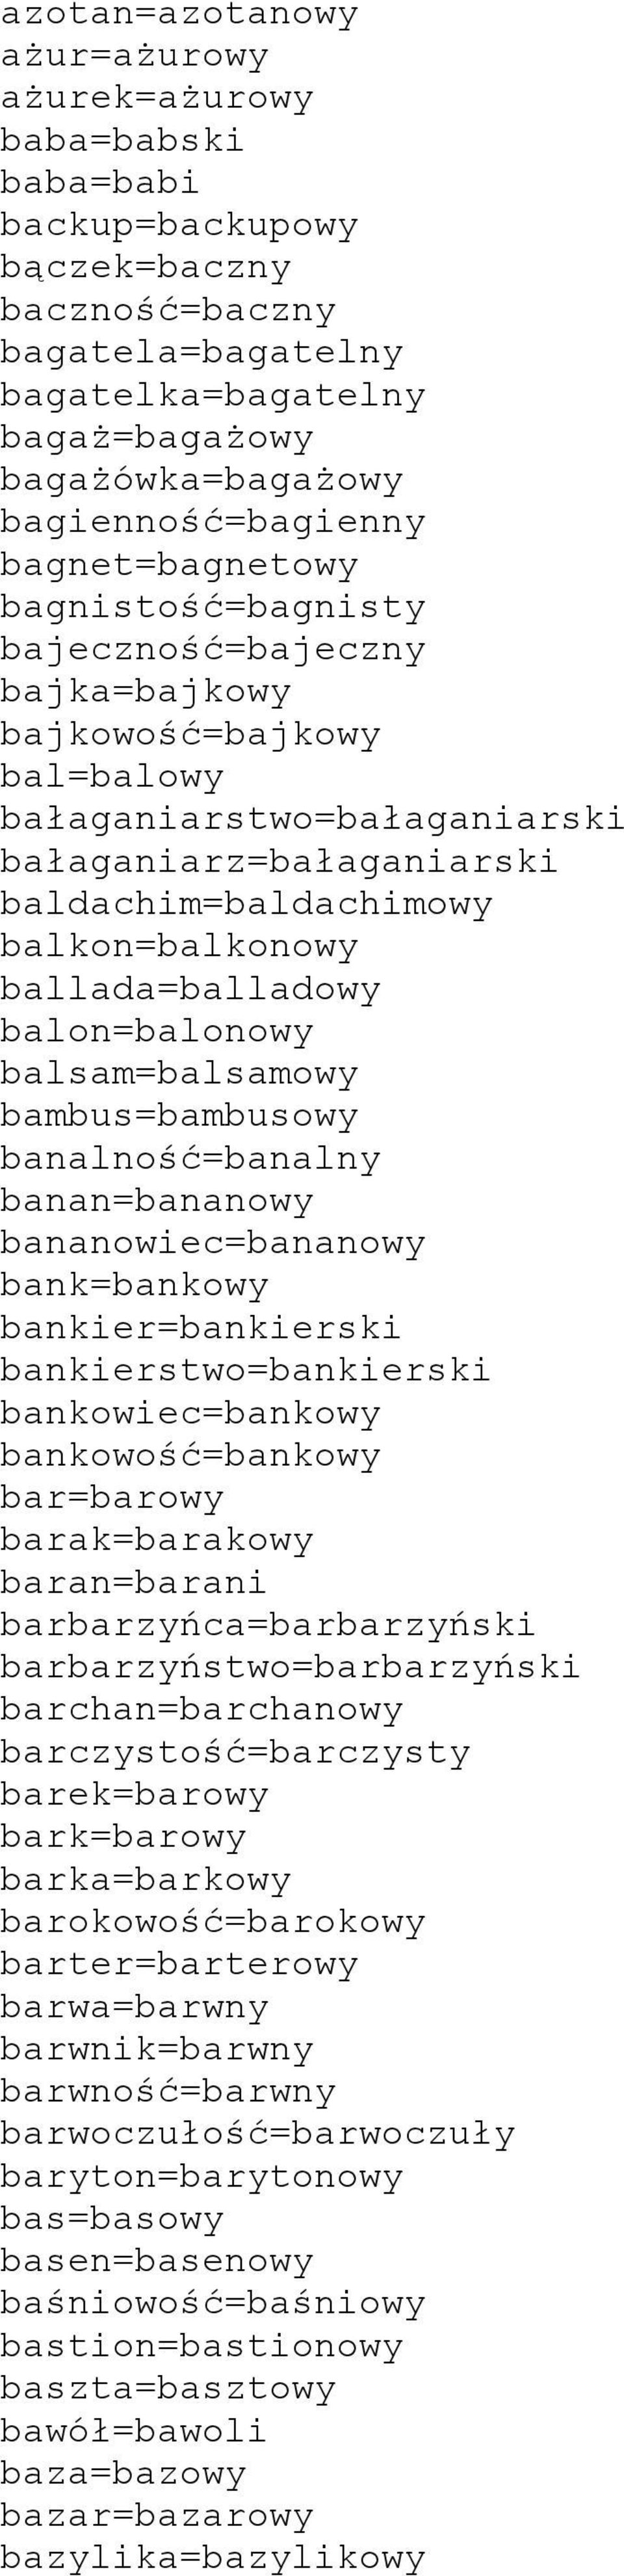 balkon=balkonowy ballada=balladowy balon=balonowy balsam=balsamowy bambus=bambusowy banalność=banalny banan=bananowy bananowiec=bananowy bank=bankowy bankier=bankierski bankierstwo=bankierski